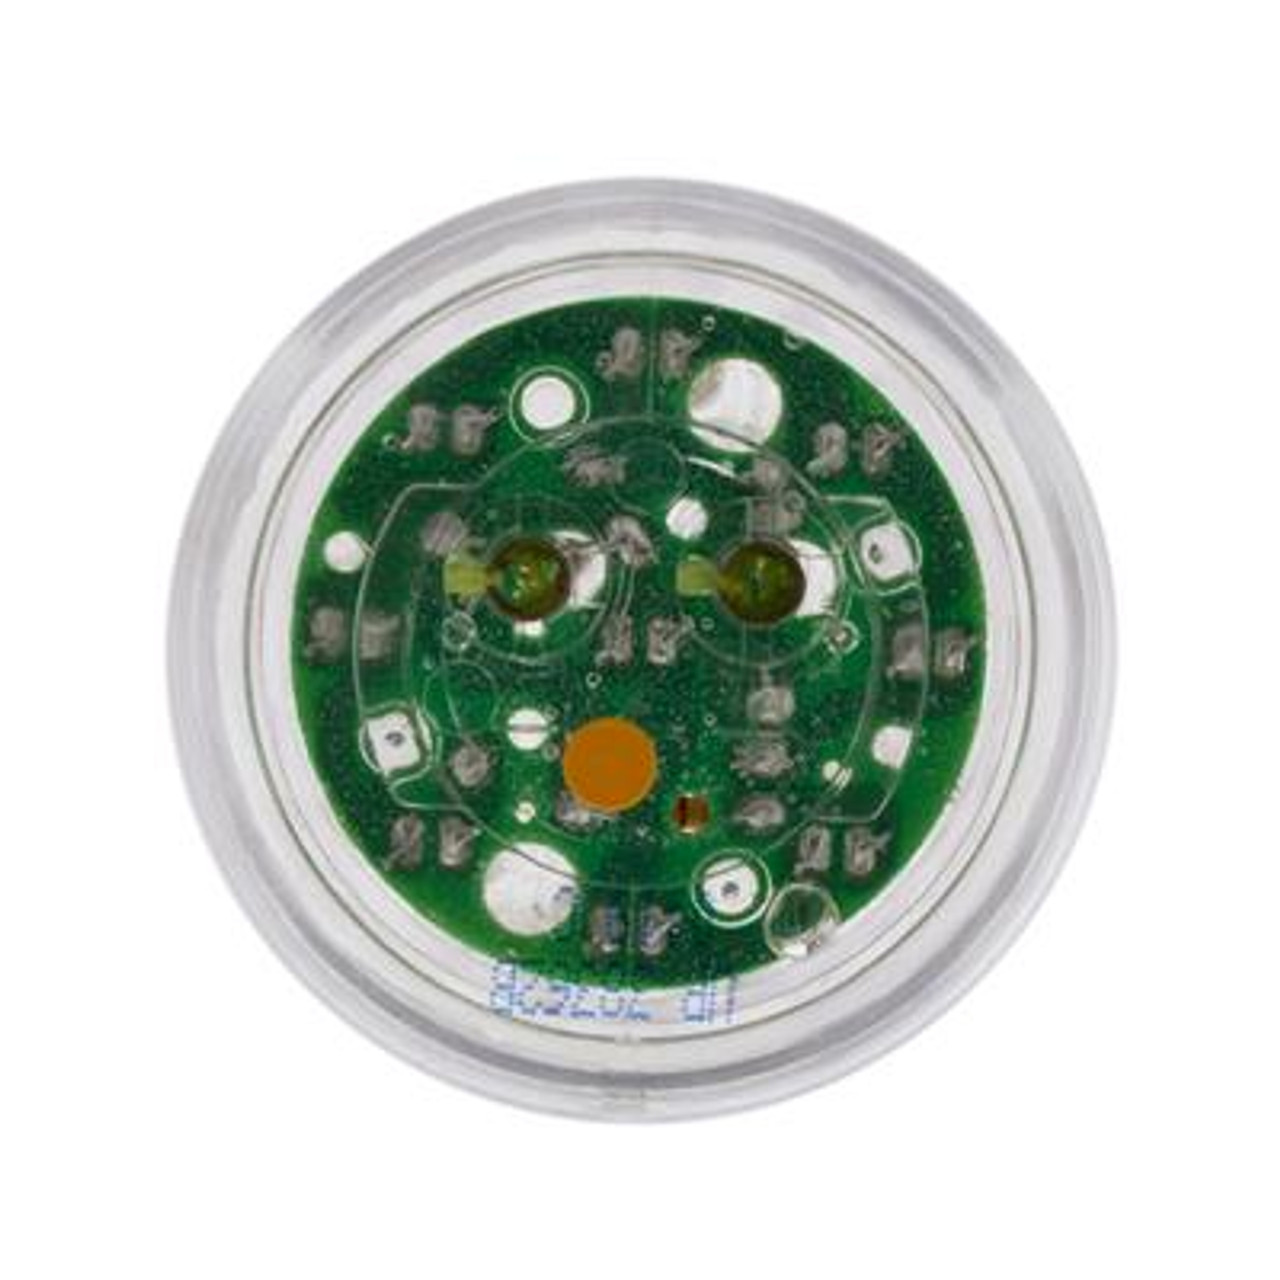 9 LED 2" Round Light (Clearance/Marker) - Amber LED/Clear Lens (Bulk)